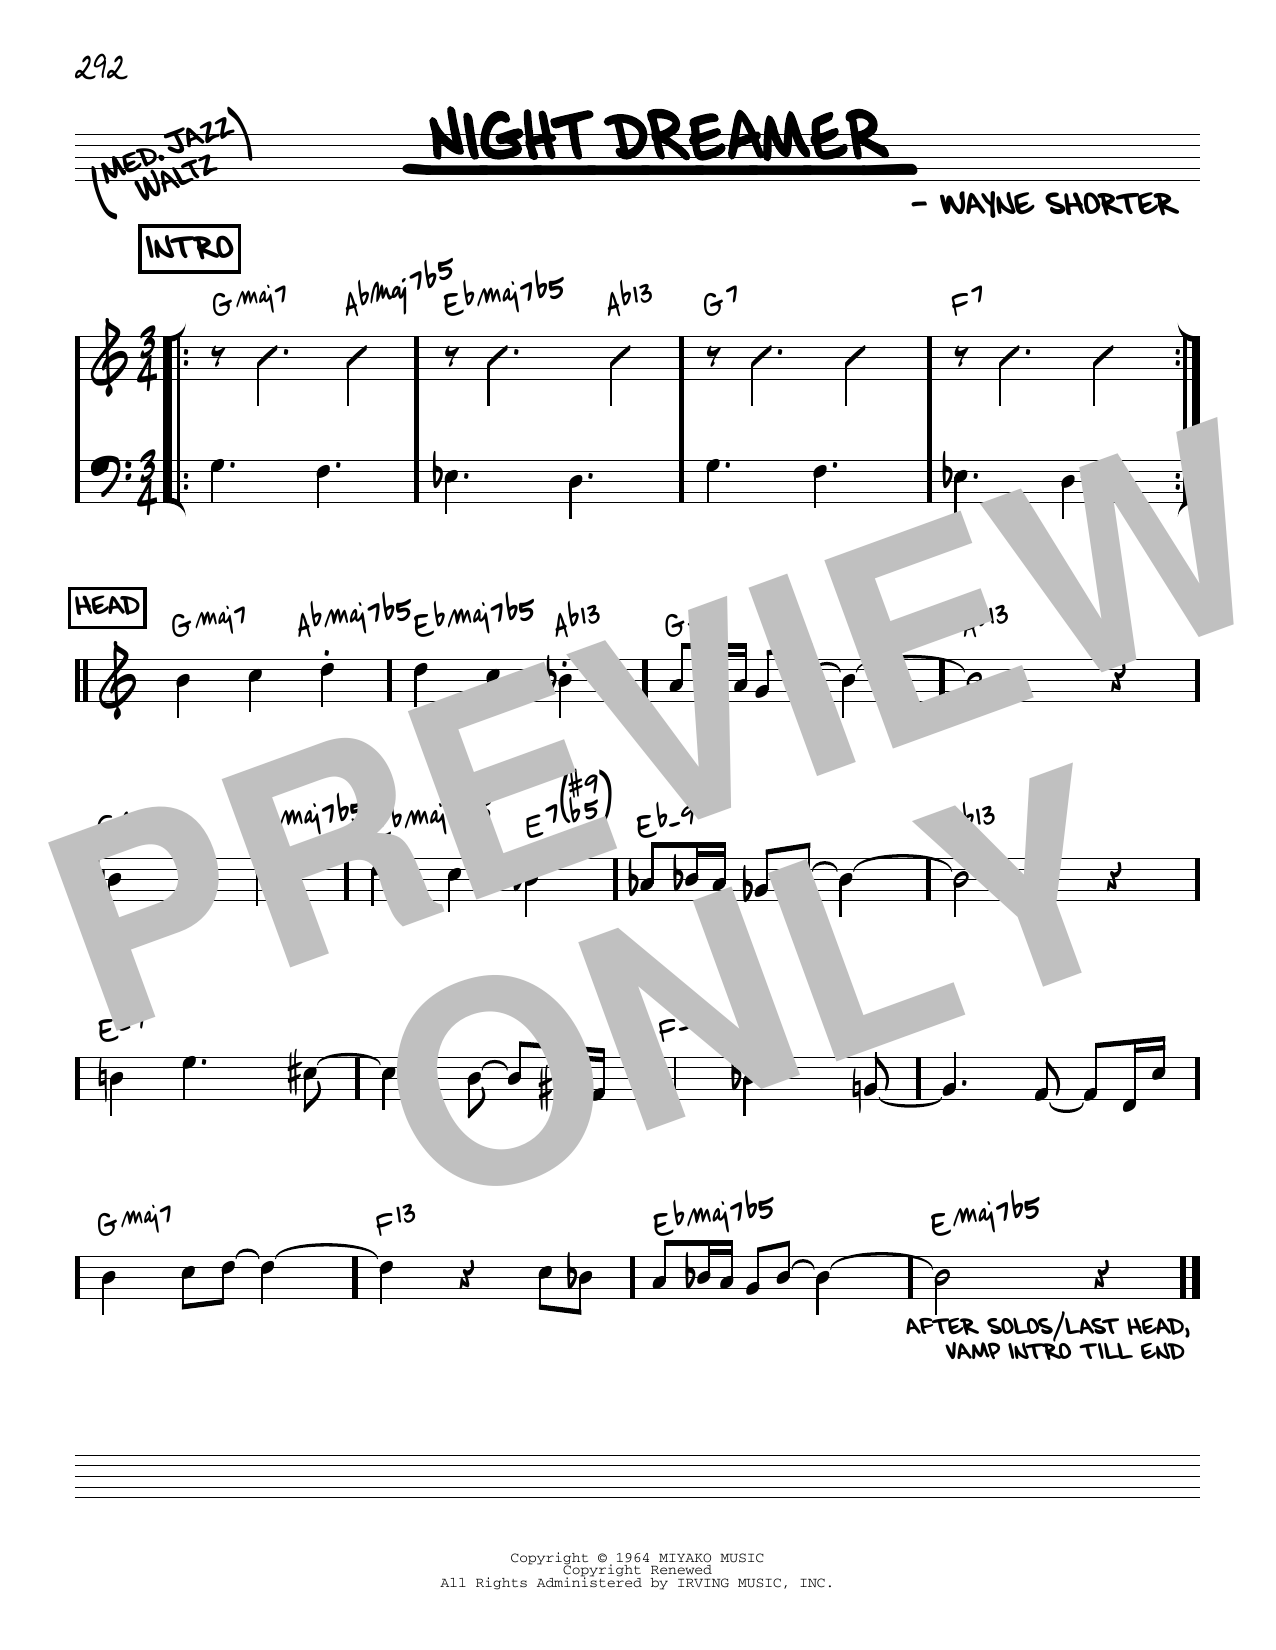 Download Wayne Shorter Night Dreamer [Reharmonized version] (a Sheet Music